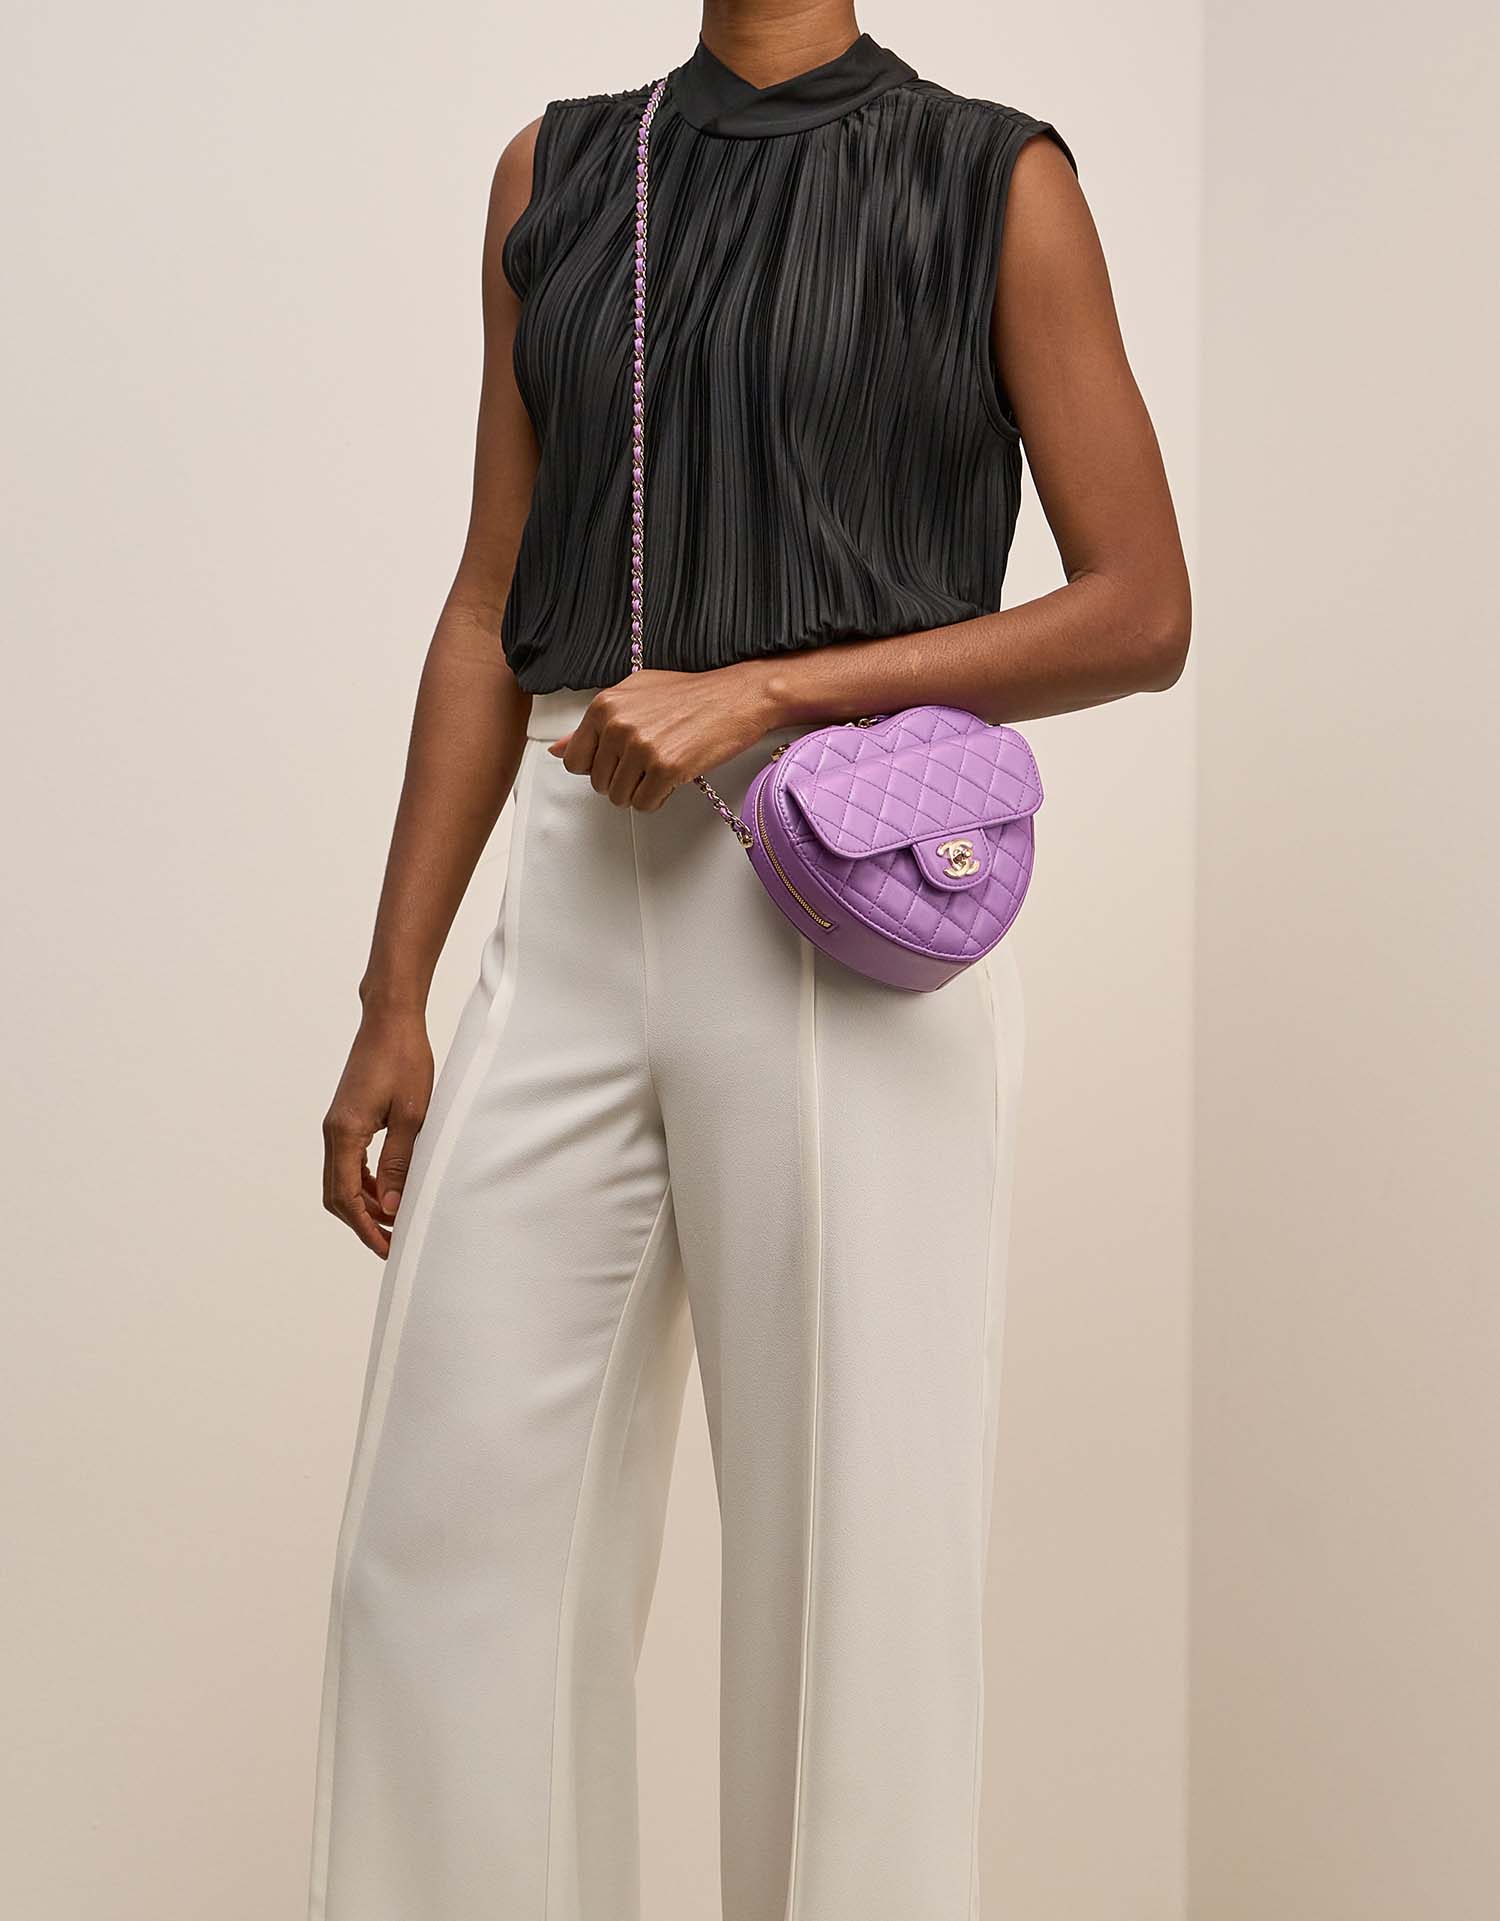 Chanel TimelessHeart Medium Violet on Model | Sell your designer bag on Saclab.com